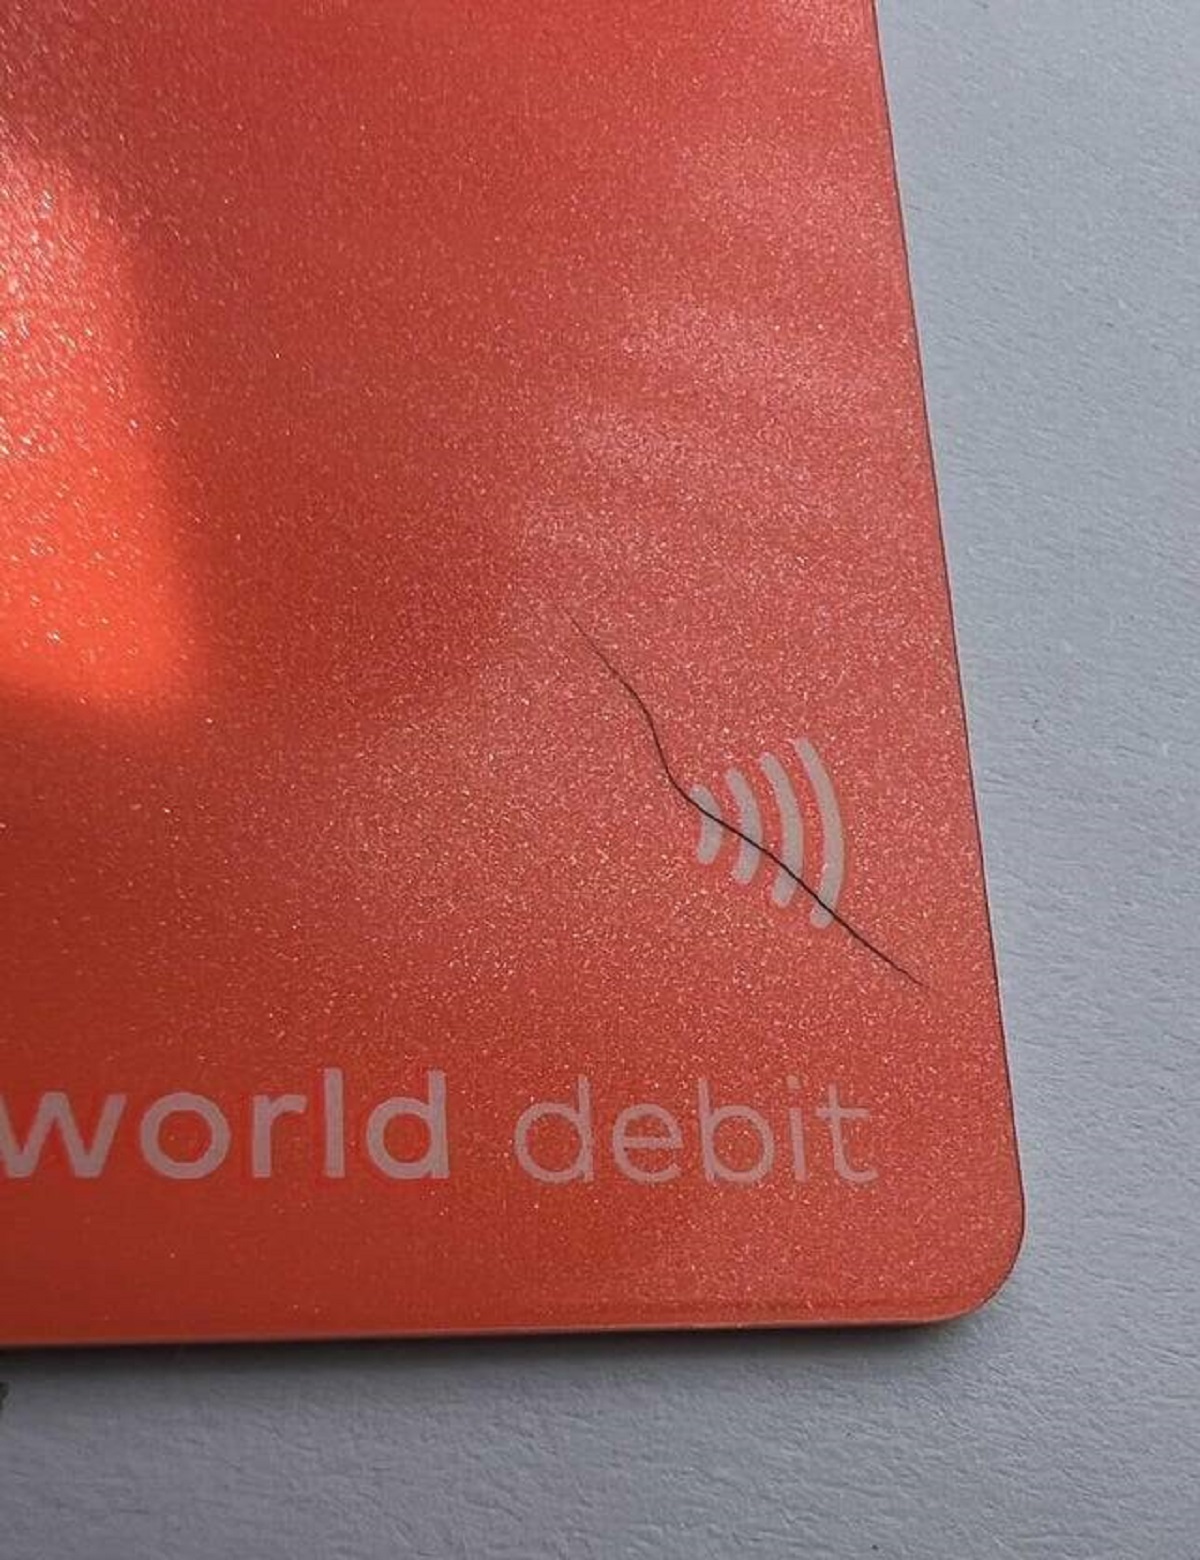 "Someone’s eyelash/hair was laminated into my debit card"